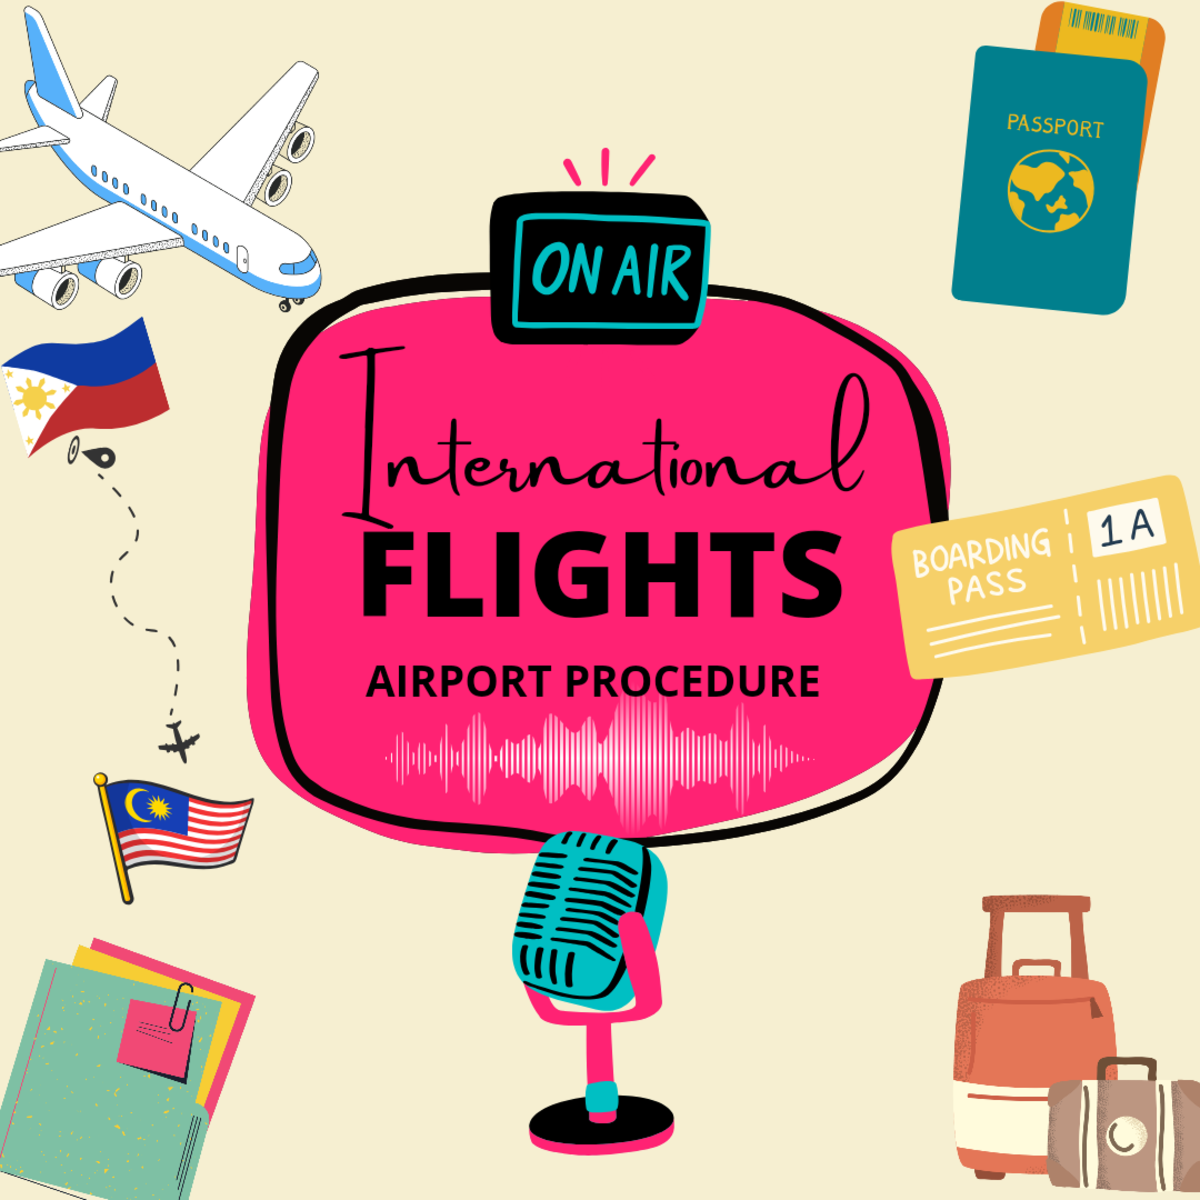 International Flights: Airport Procedure